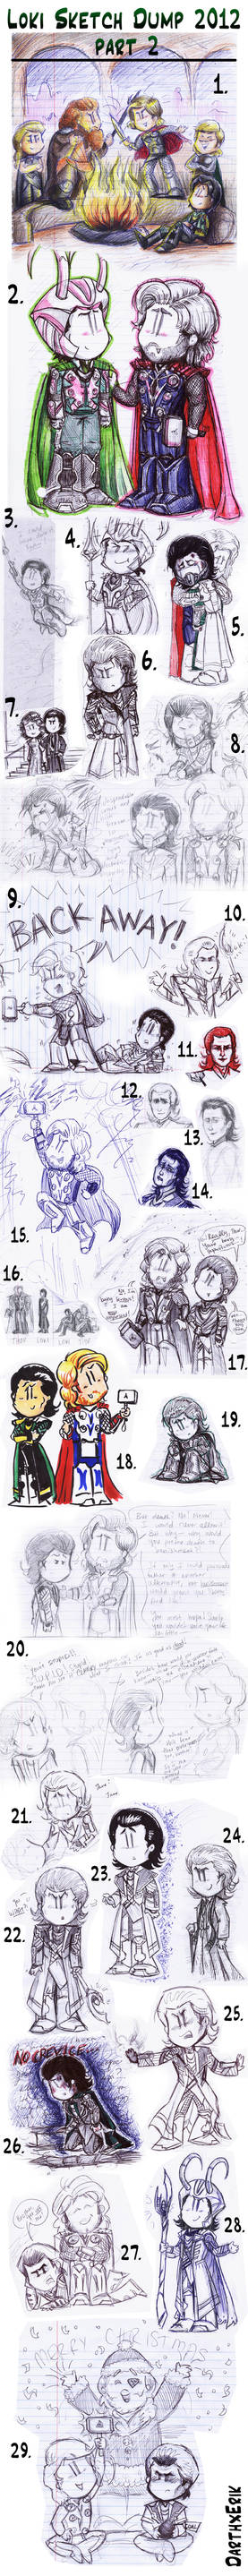 Loki Sketch Dump 2012 part 2